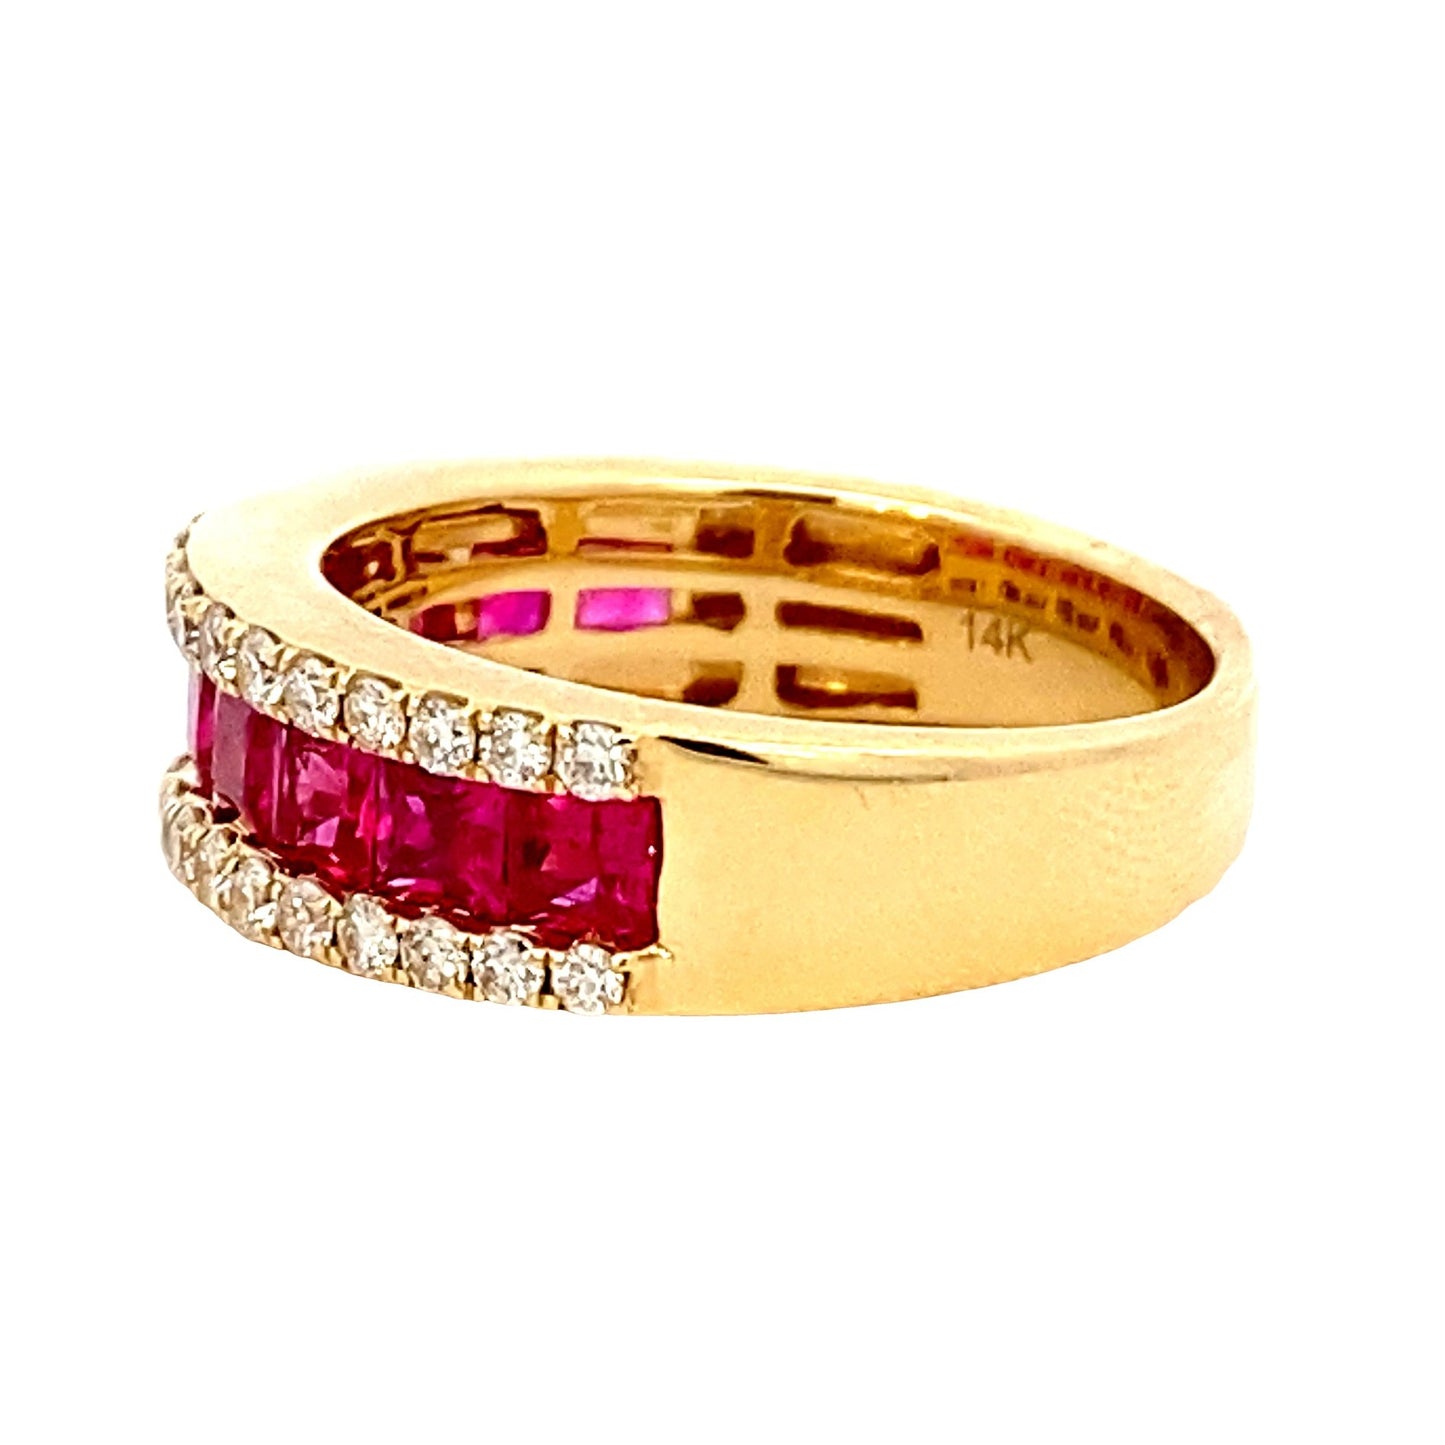 Stern International | 14K Yellow Gold Diamond and Ruby Ring